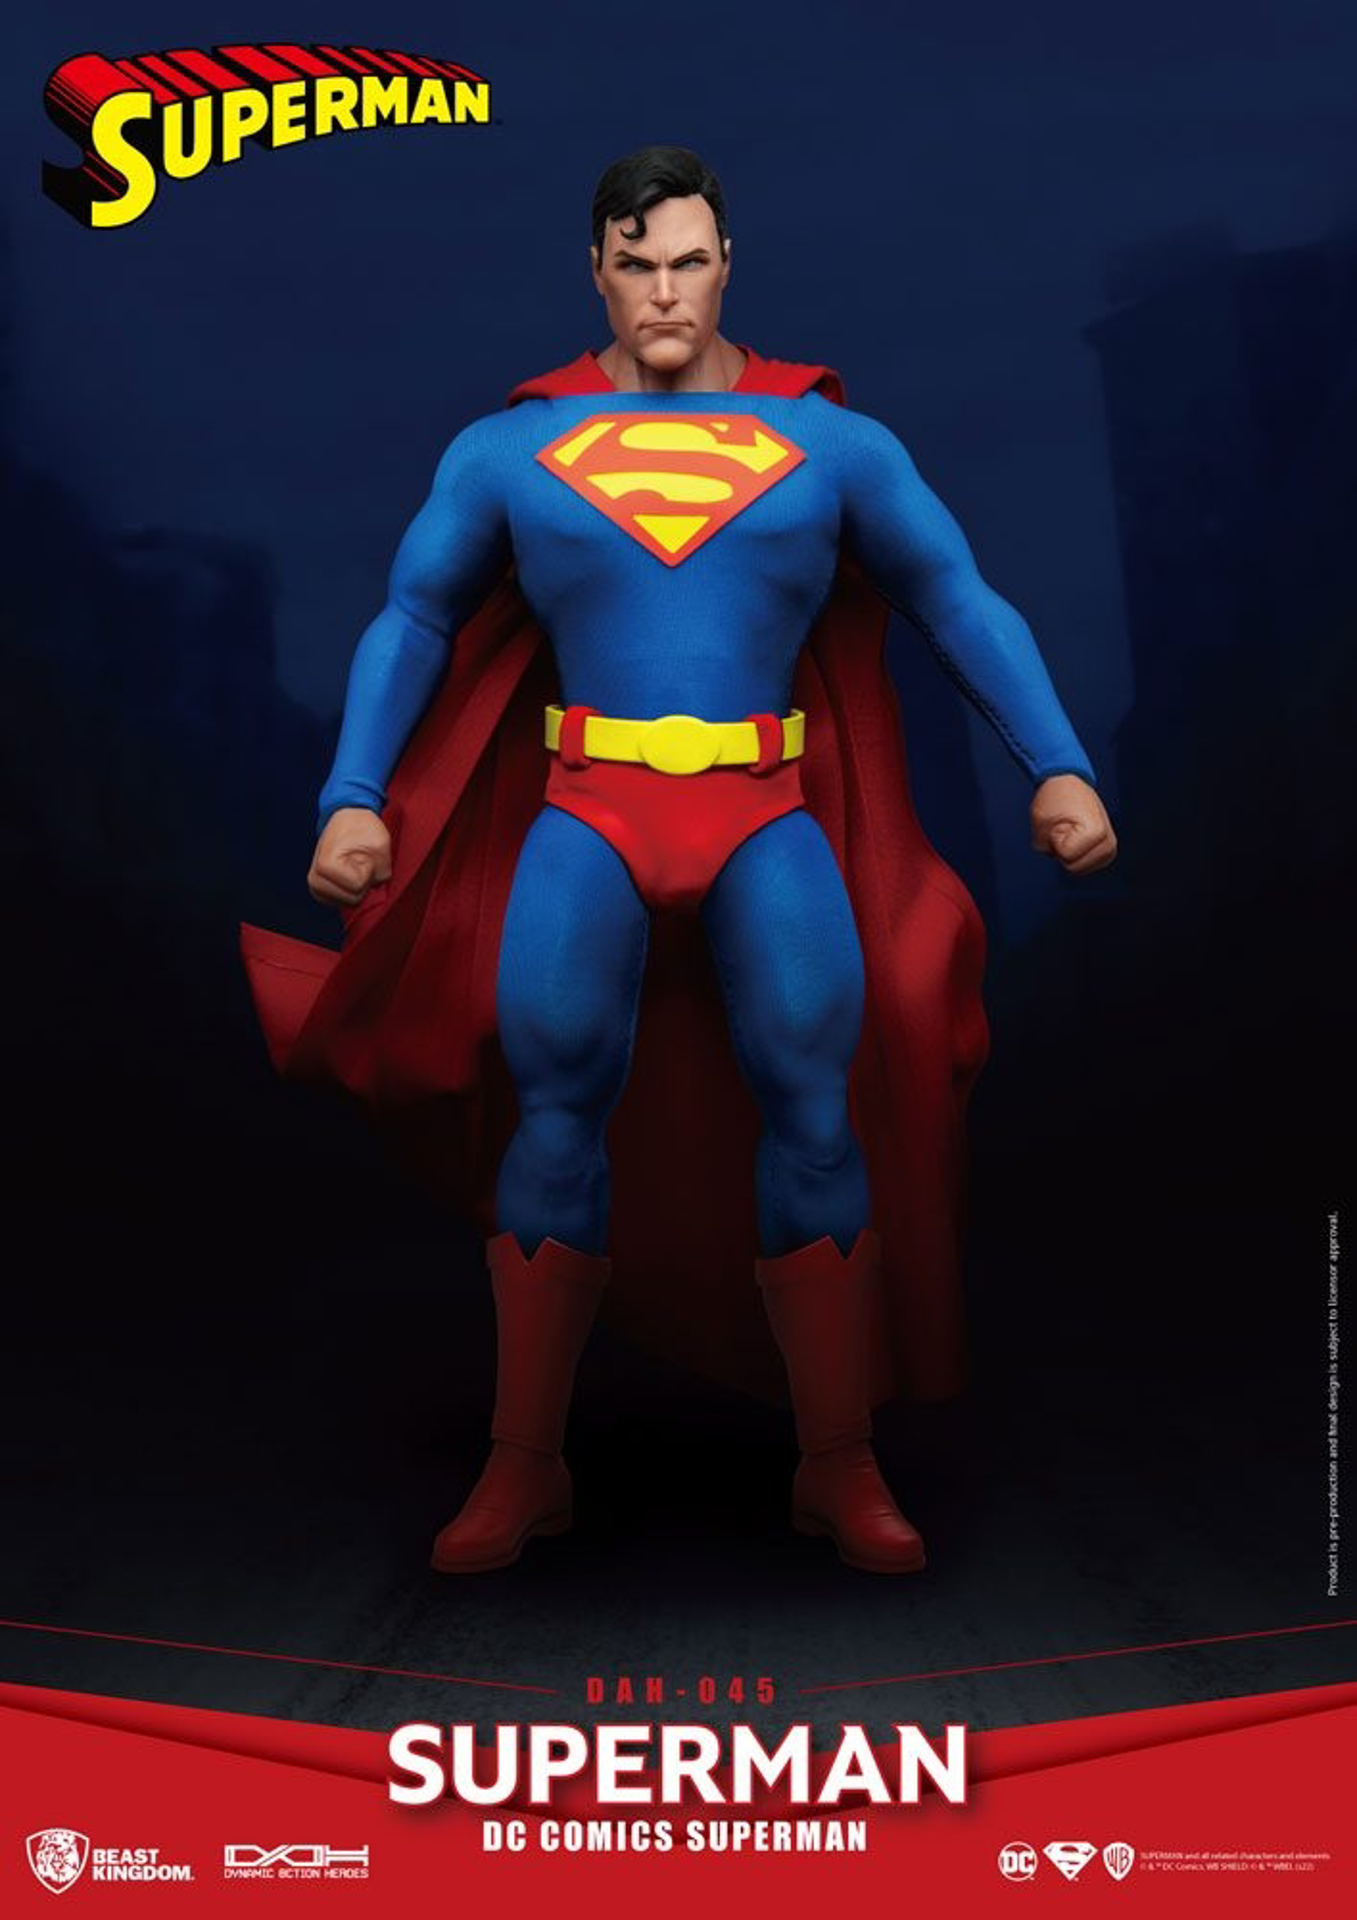 DC Comics - DAH-045 - Superman